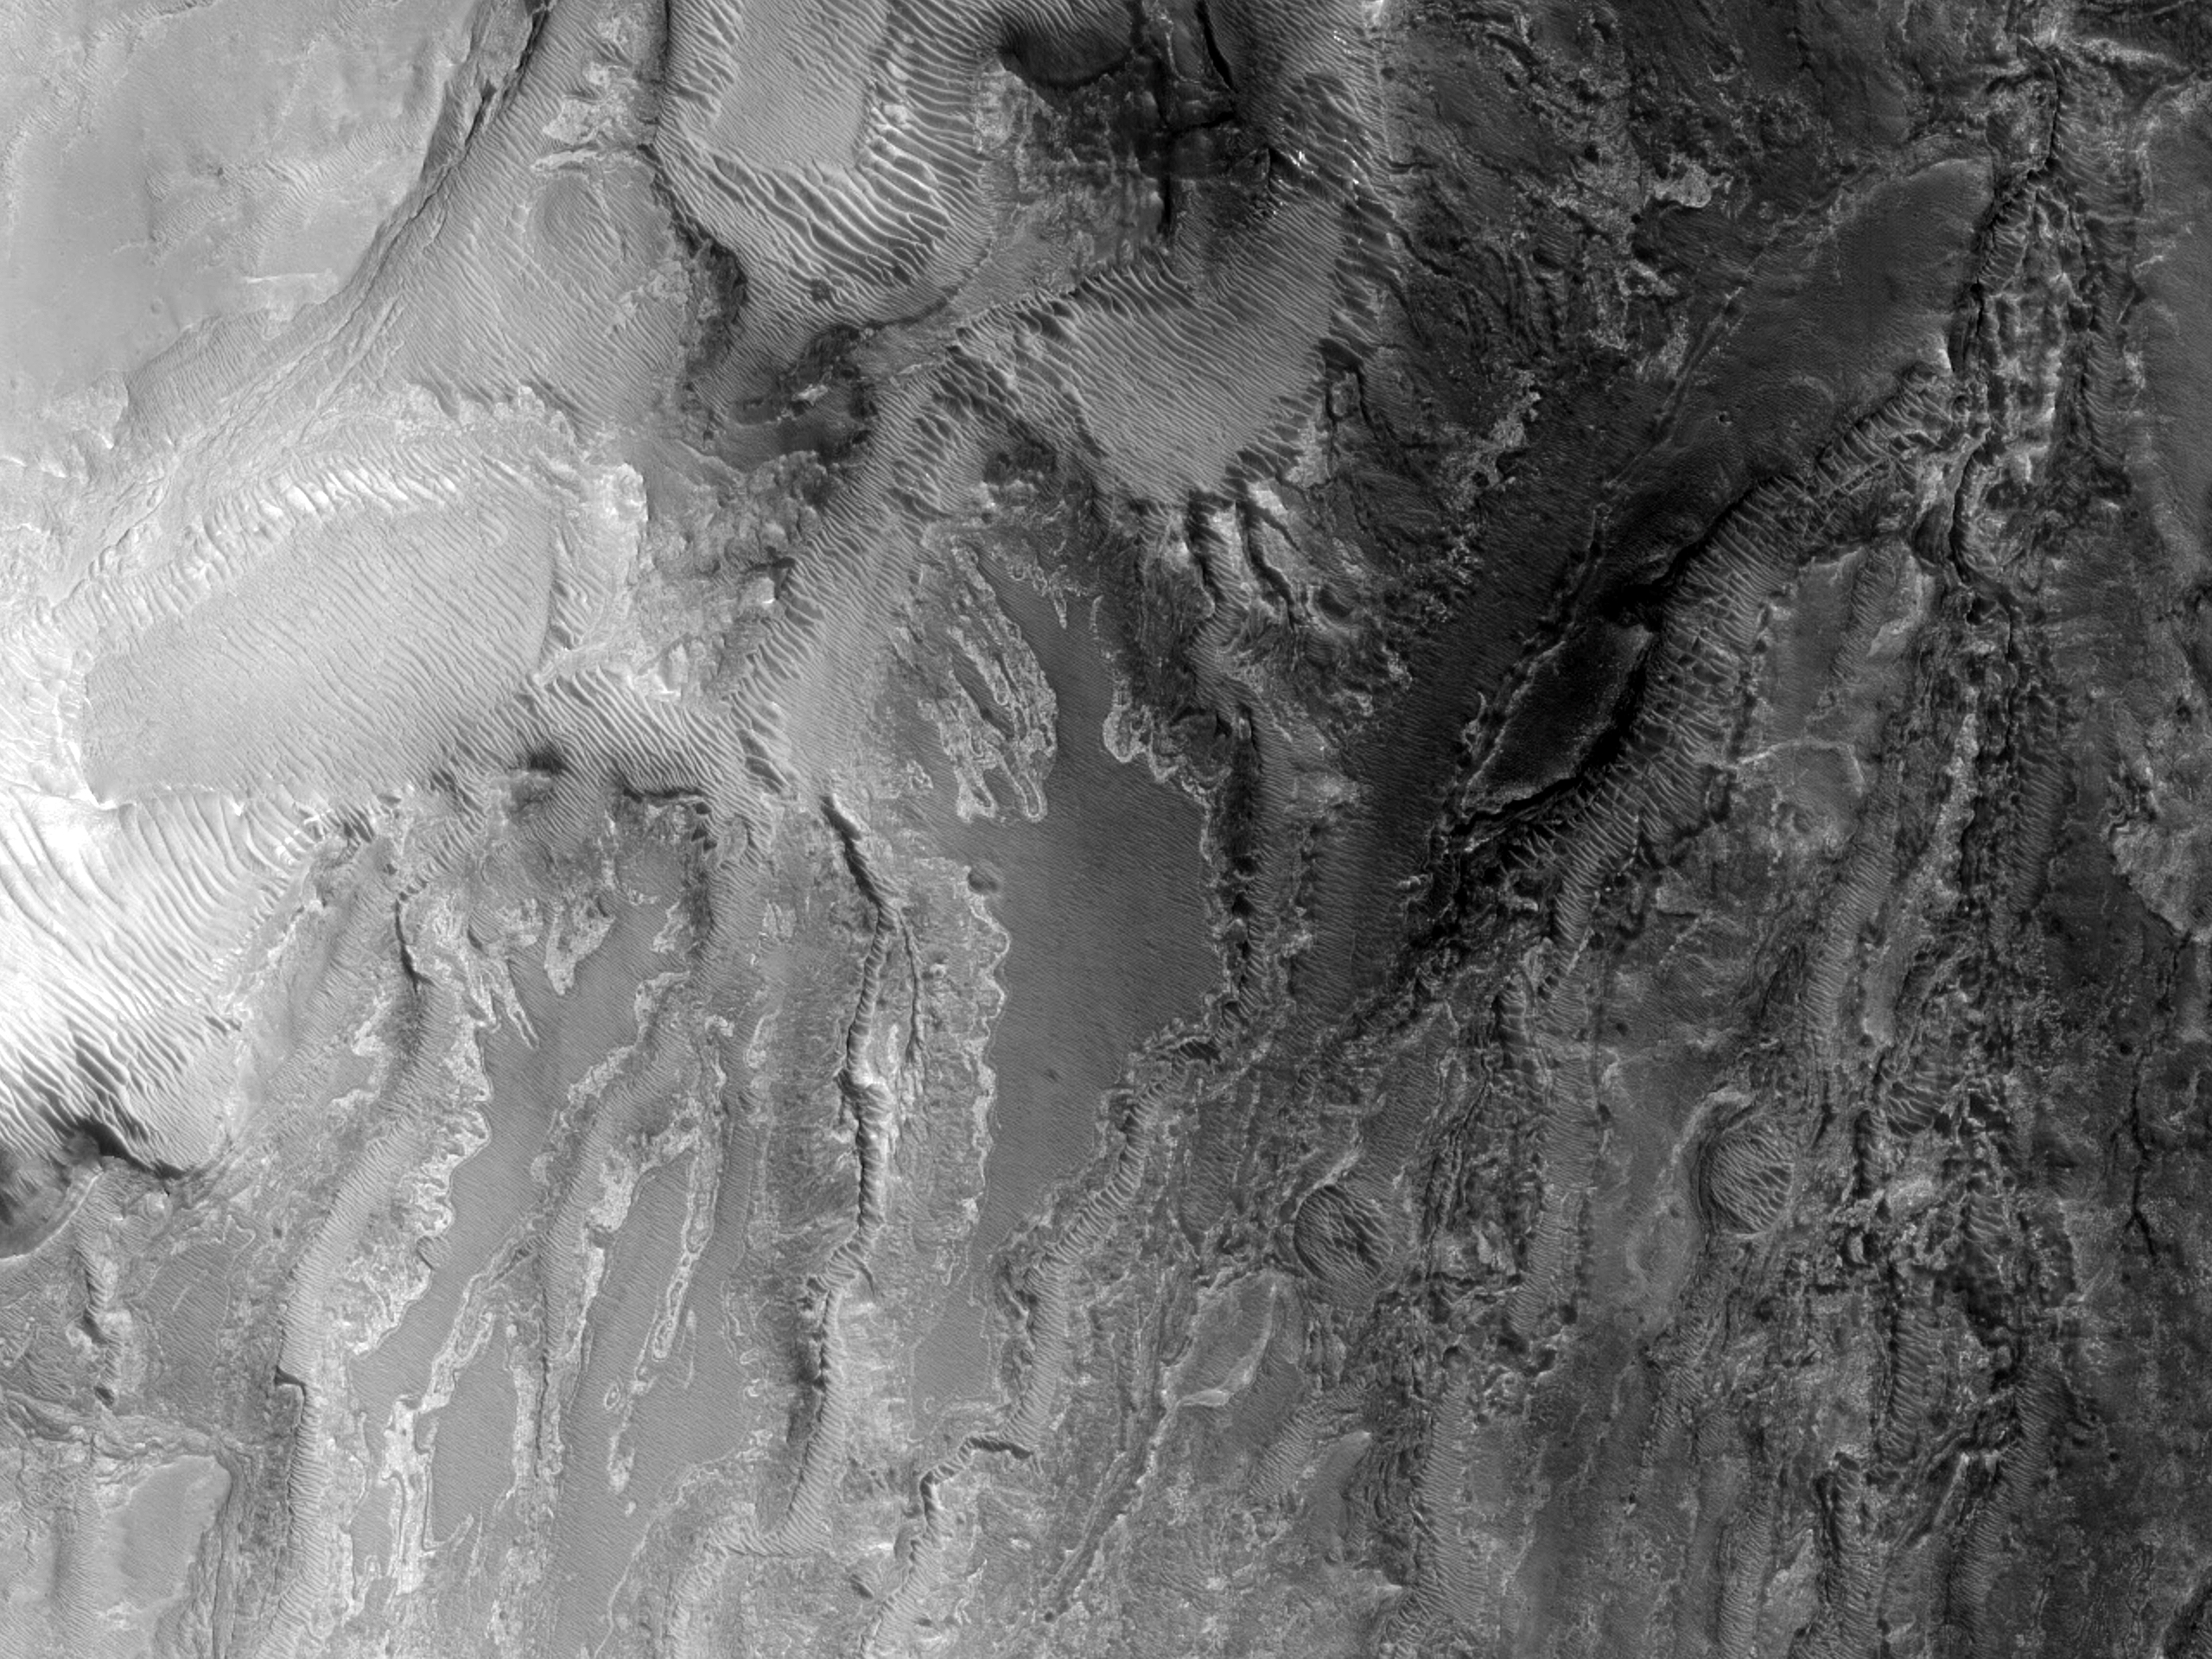 Near surface. Долины Маринер чб. Лучшие фотографии Долины Маринера. Fluvial+ Valles Marineris Melas chasma.